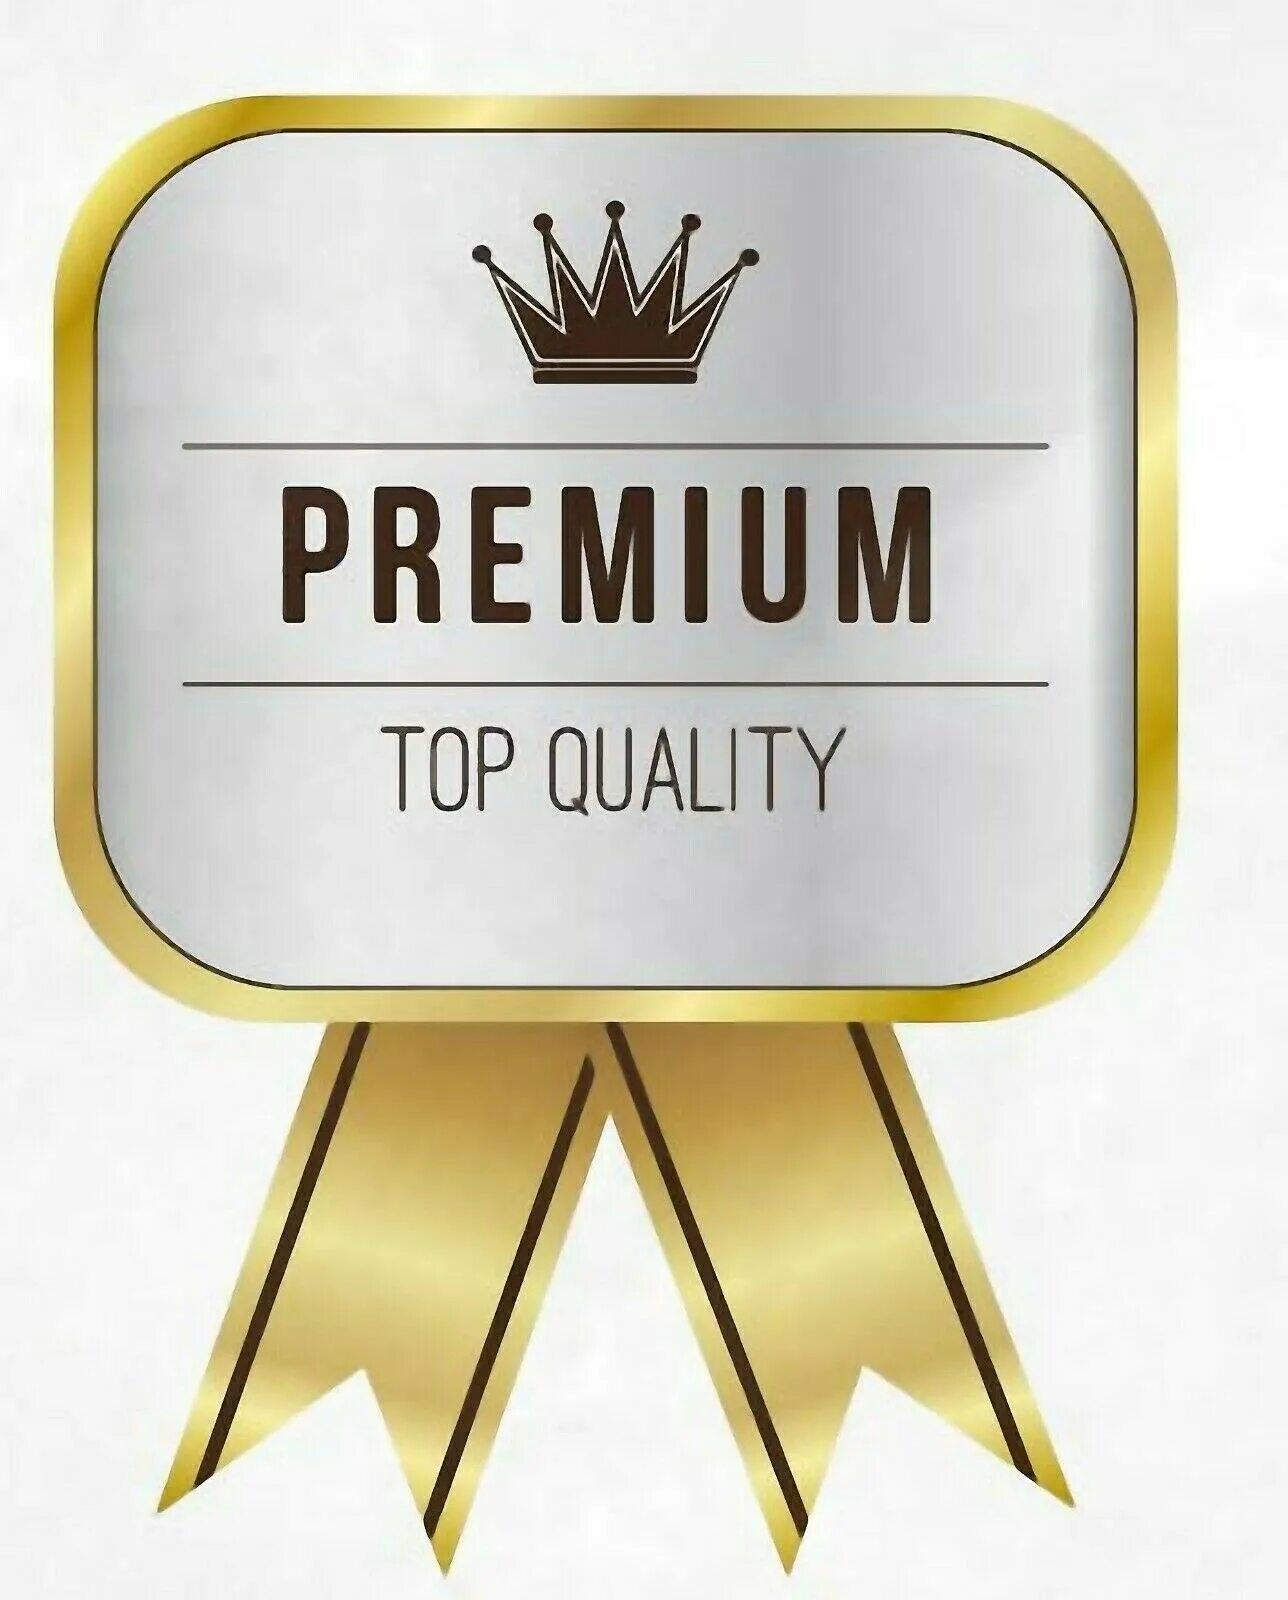 Значок премиум. Значок Premium quality. Премиальное качество. Премиум качество. Premium icons